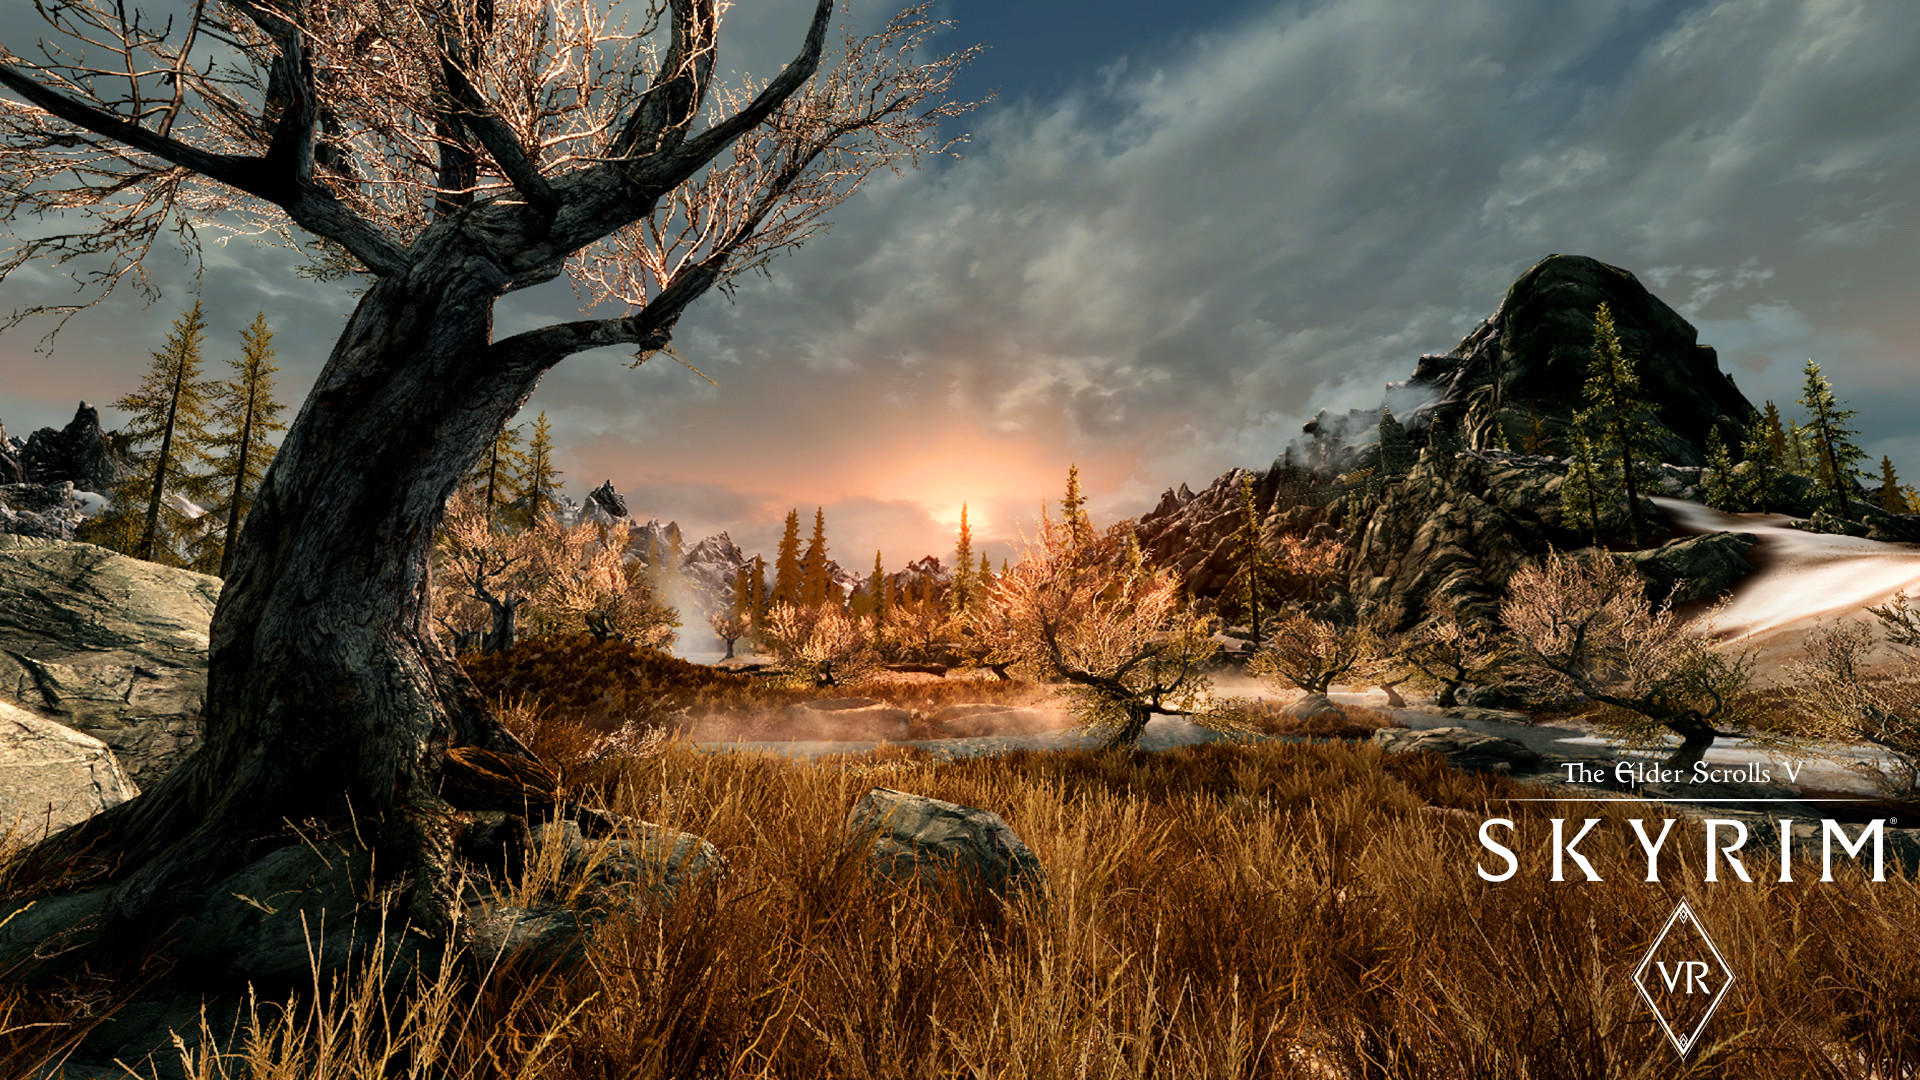 Screenshot 1 of The Elder Scrolls V: Скайрим VR 